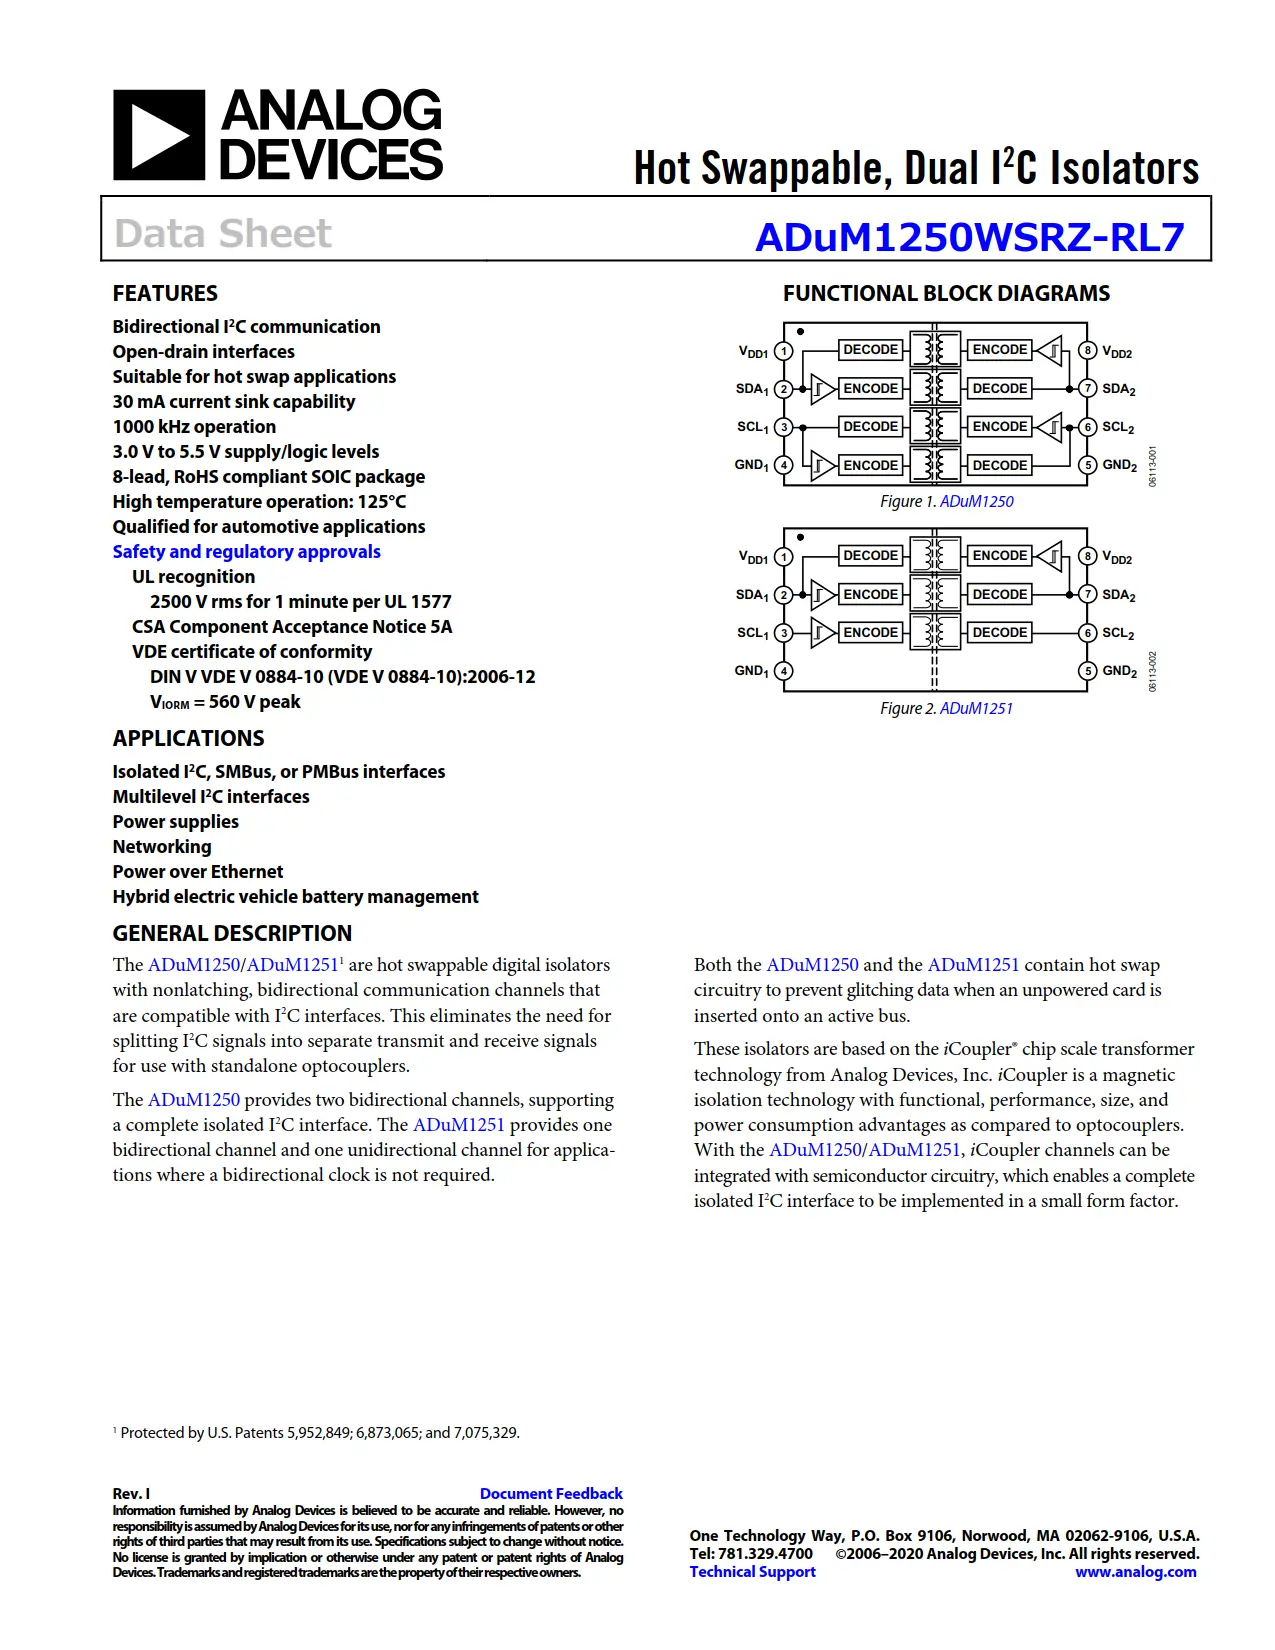 ADuM1250WSRZ-RL7 DataSheet